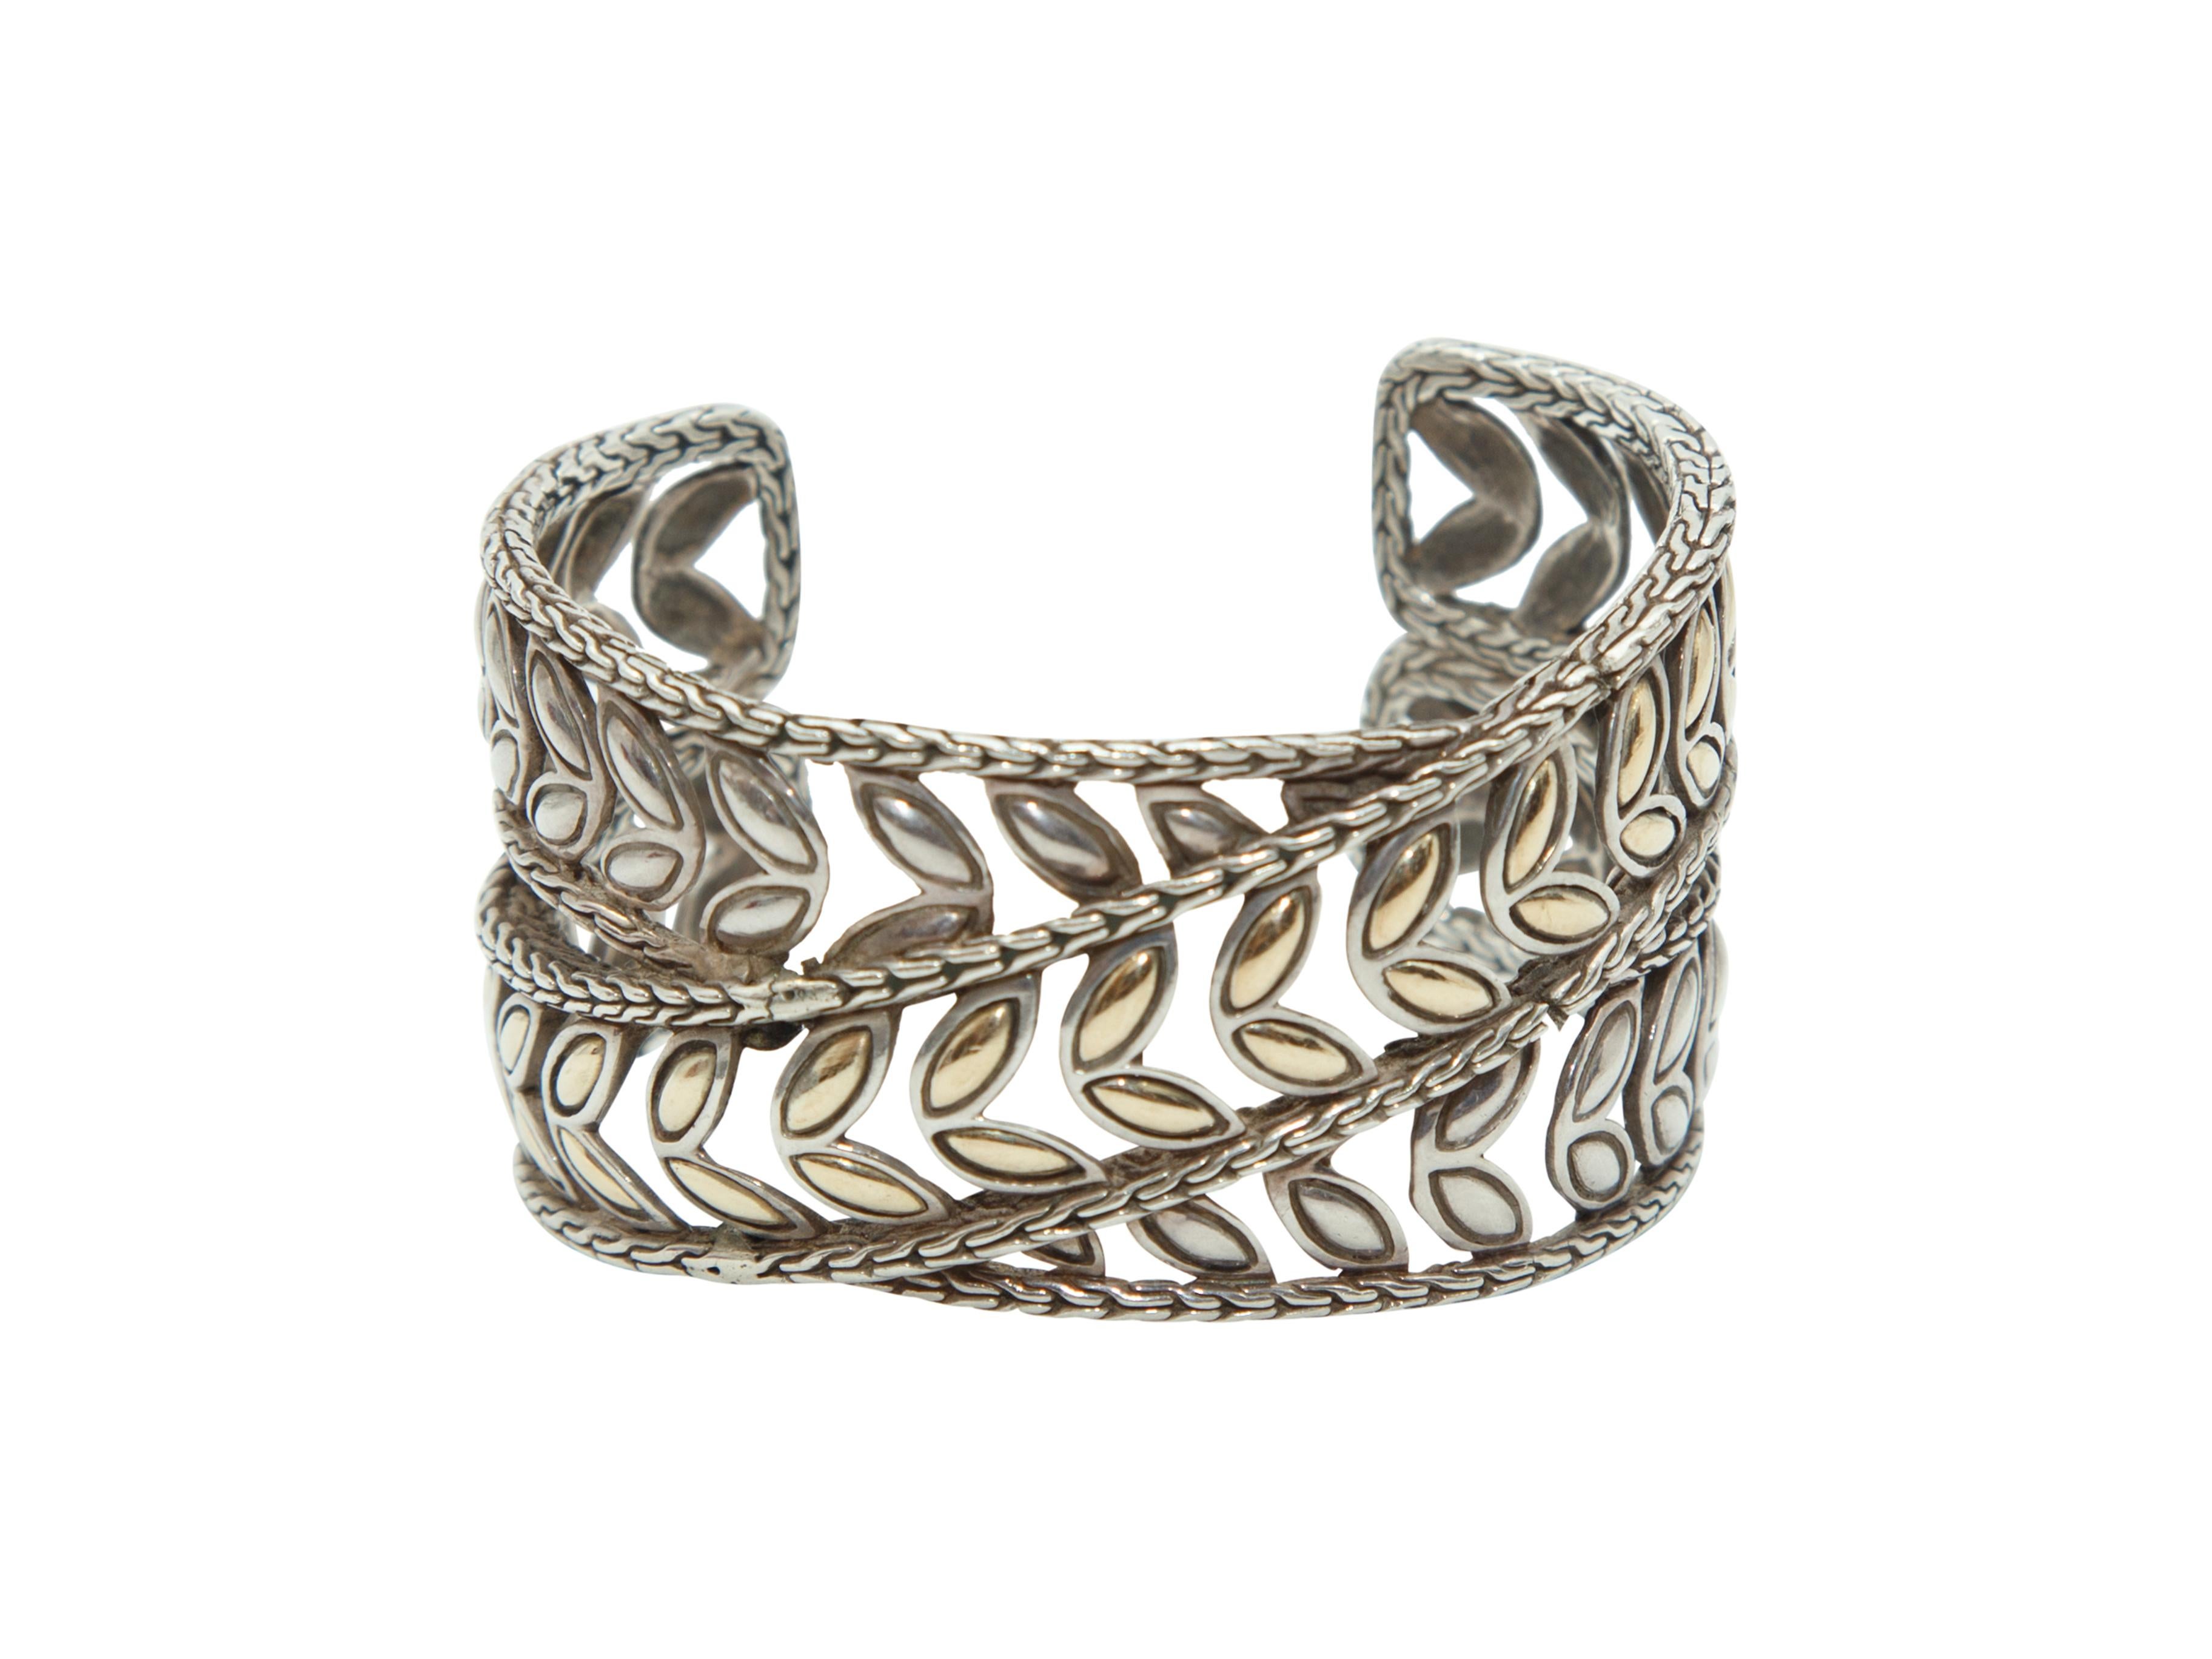 Product details:  Sterling silver leaf cuff bracelet by John Hardy.  6